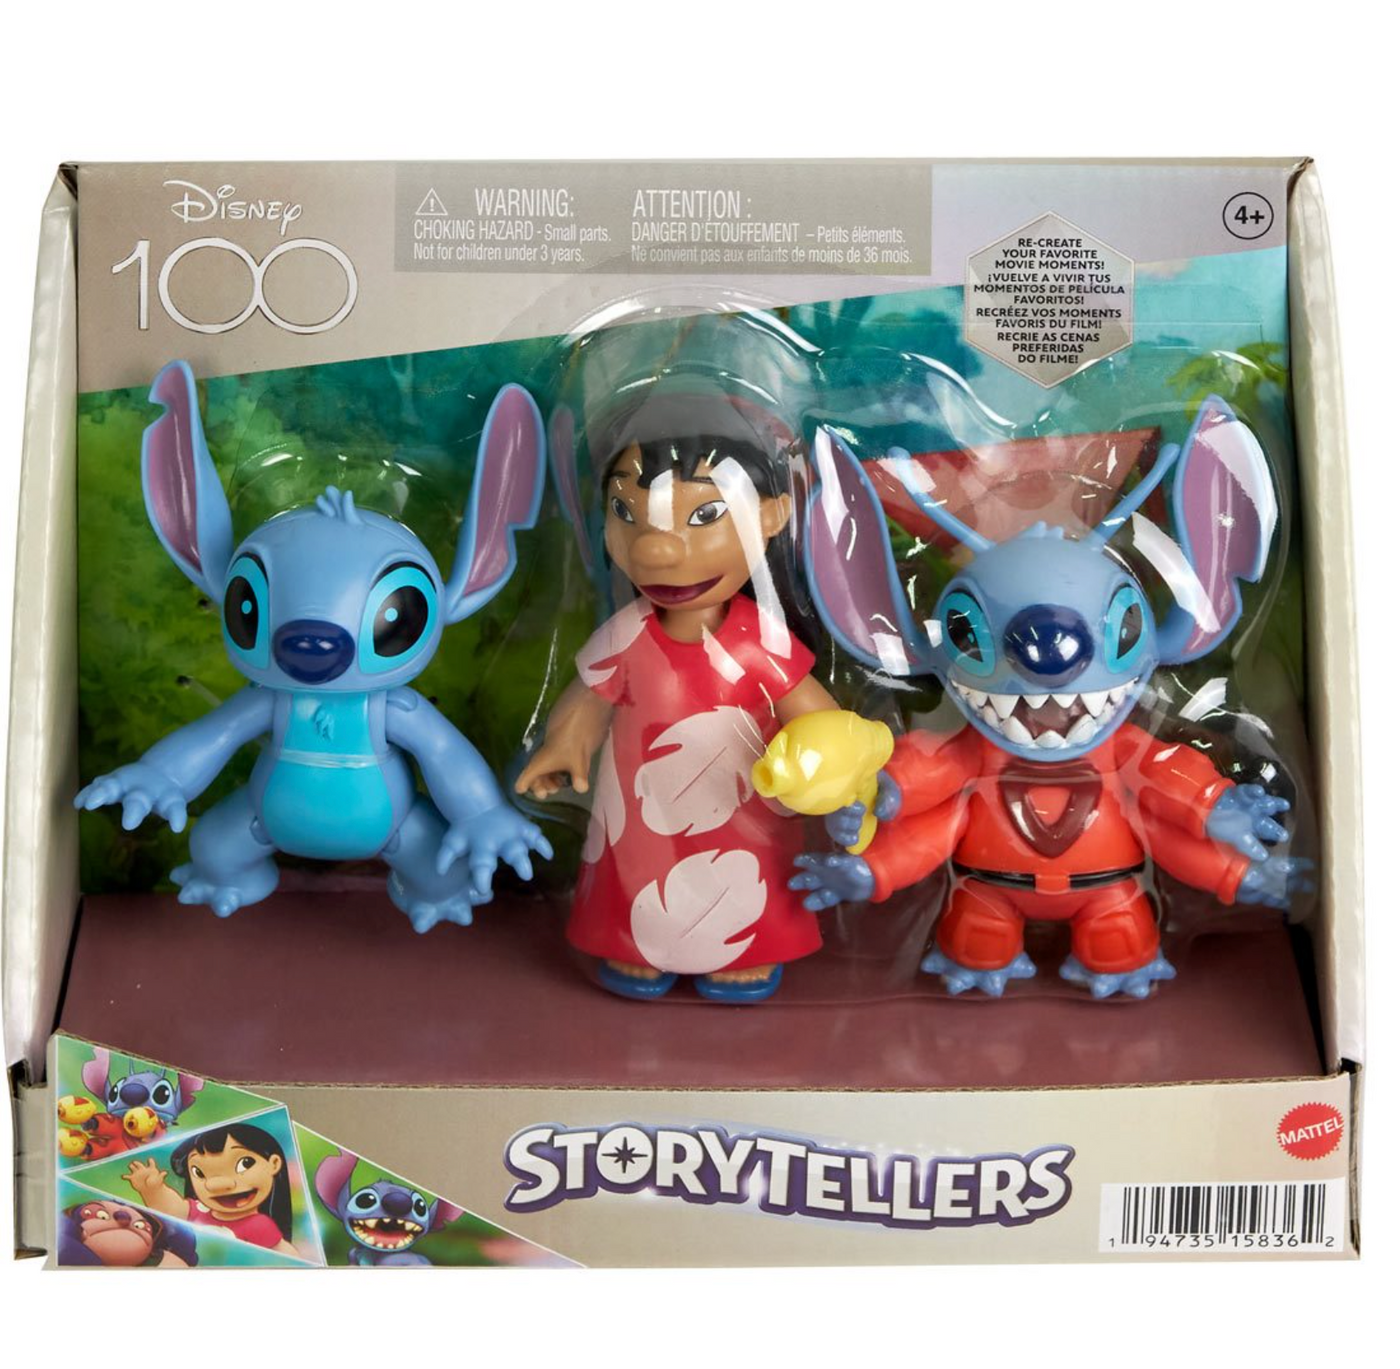 Disney Disney 100 Celebration Lilo and Stitch Story Tellers Action Figure New